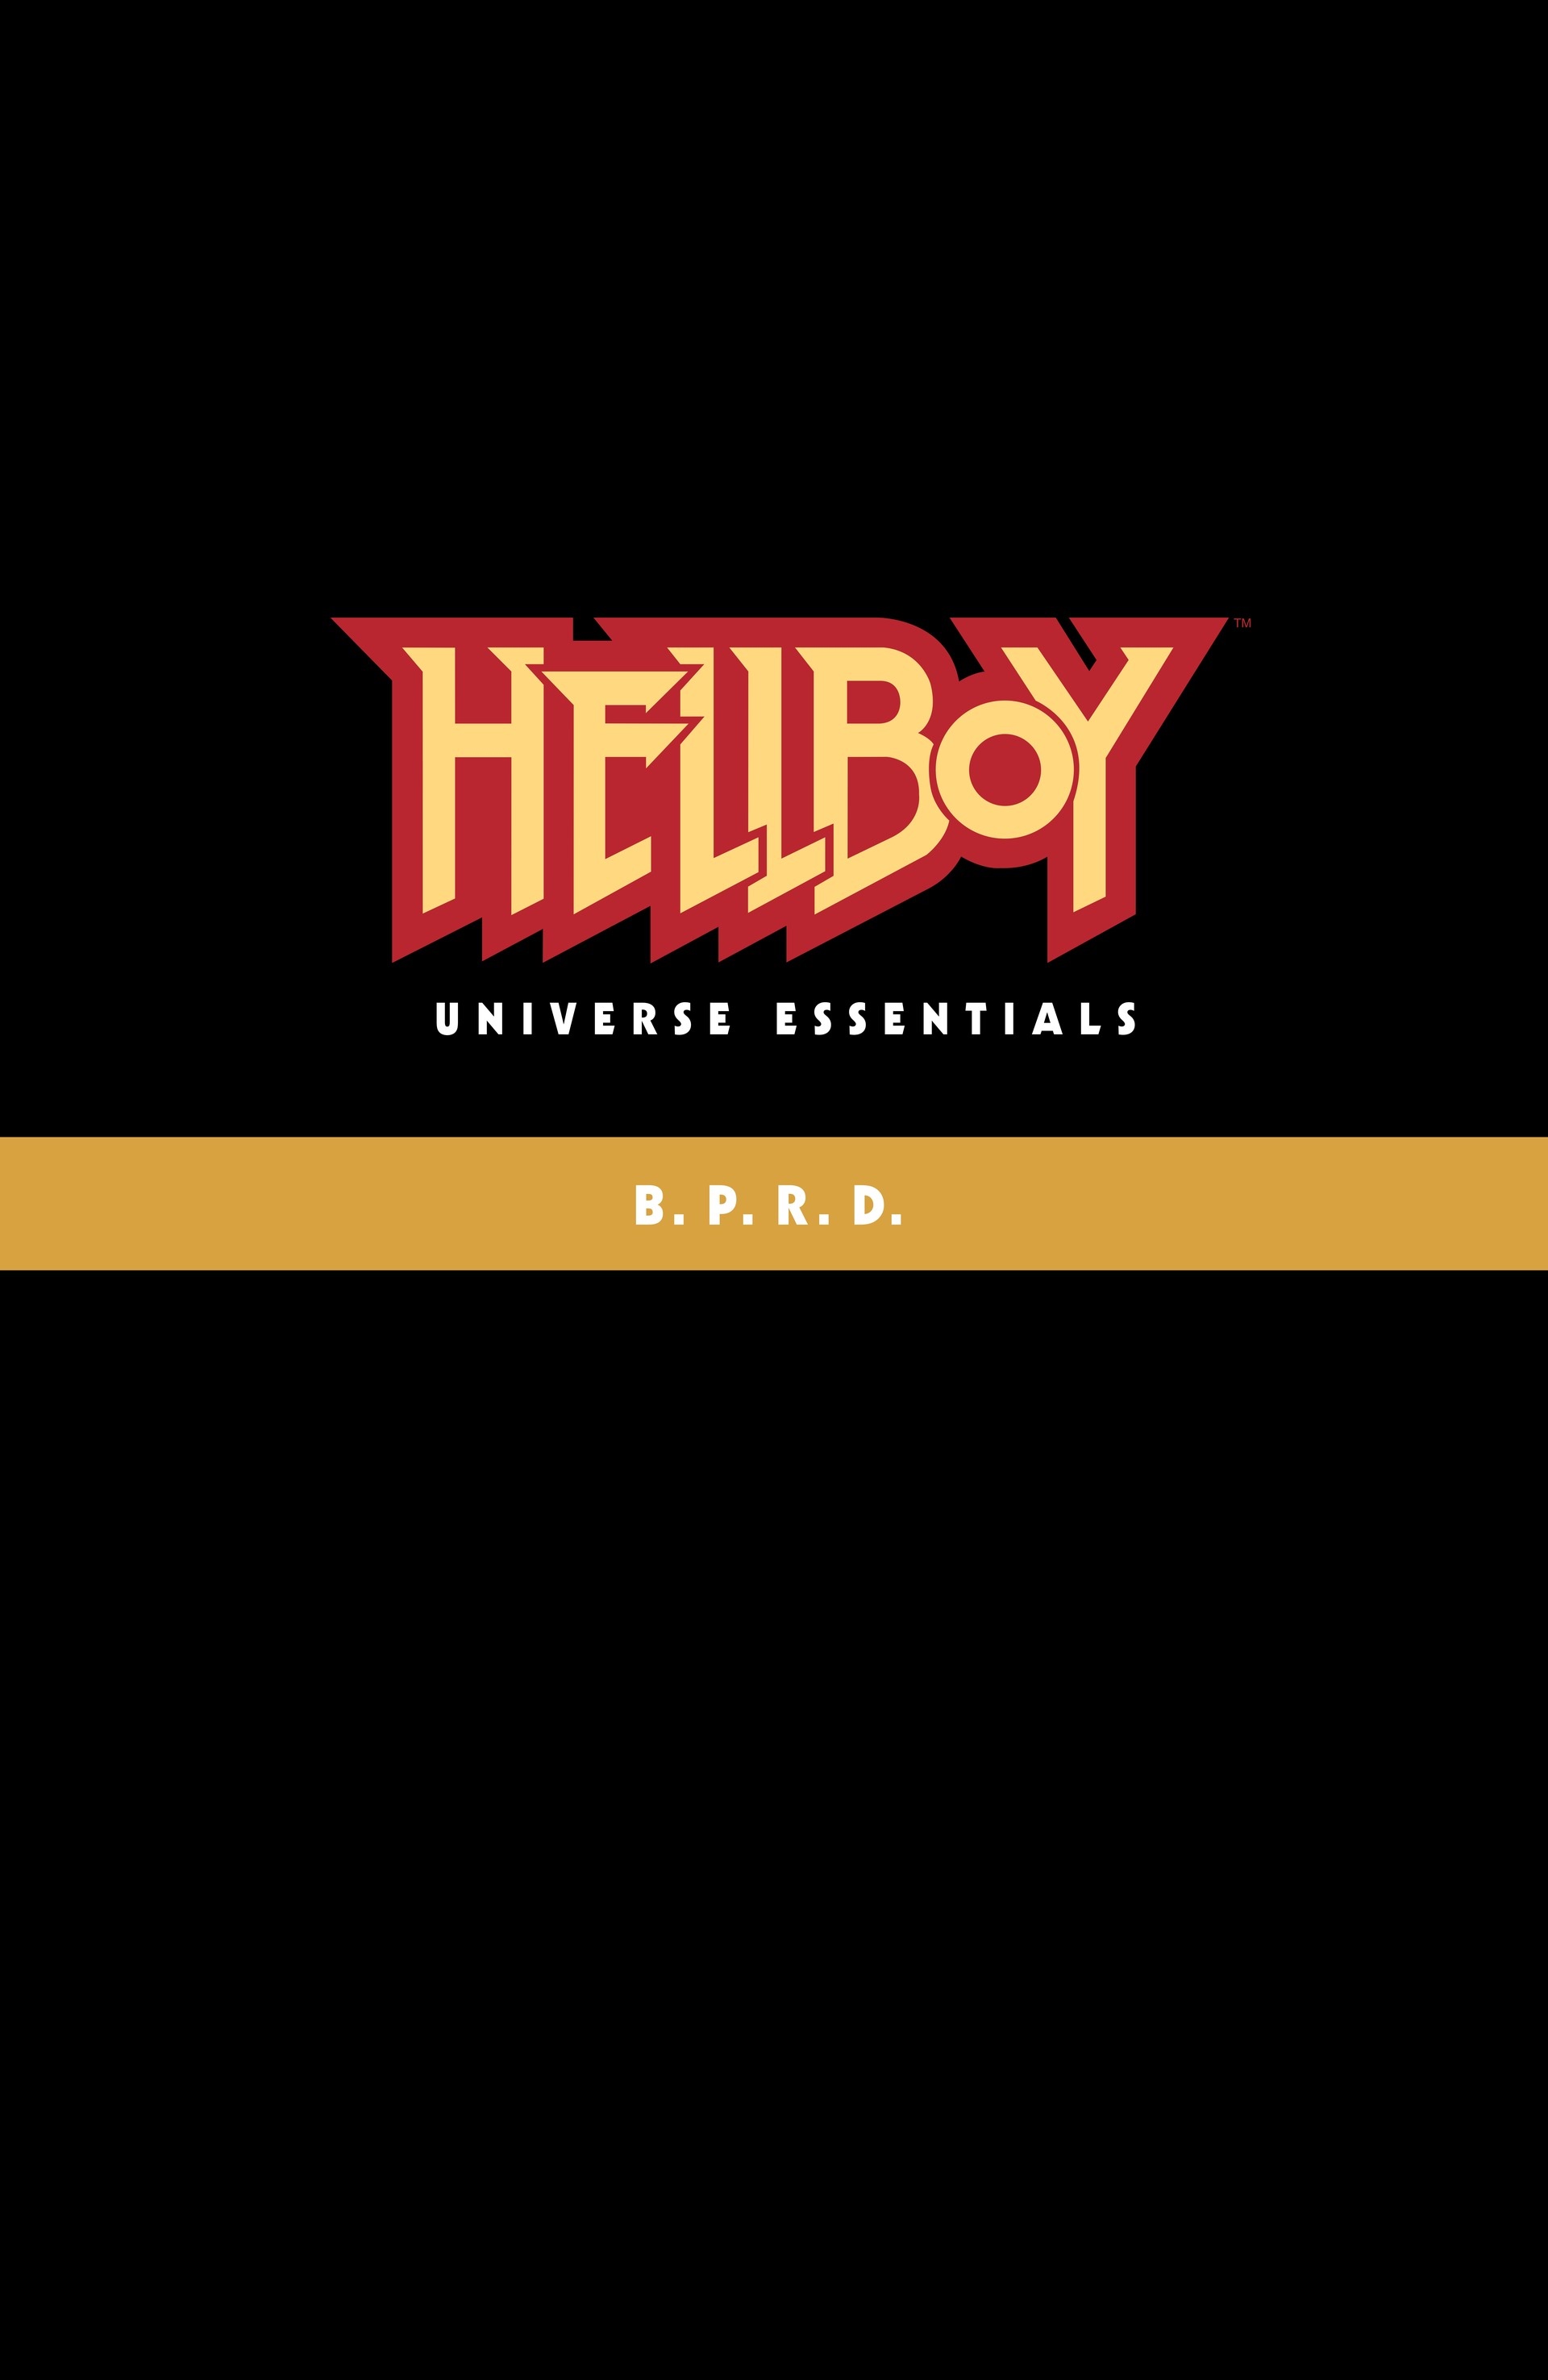 Read online Hellboy Universe Essentials: B.P.R.D. comic -  Issue # TPB - 3